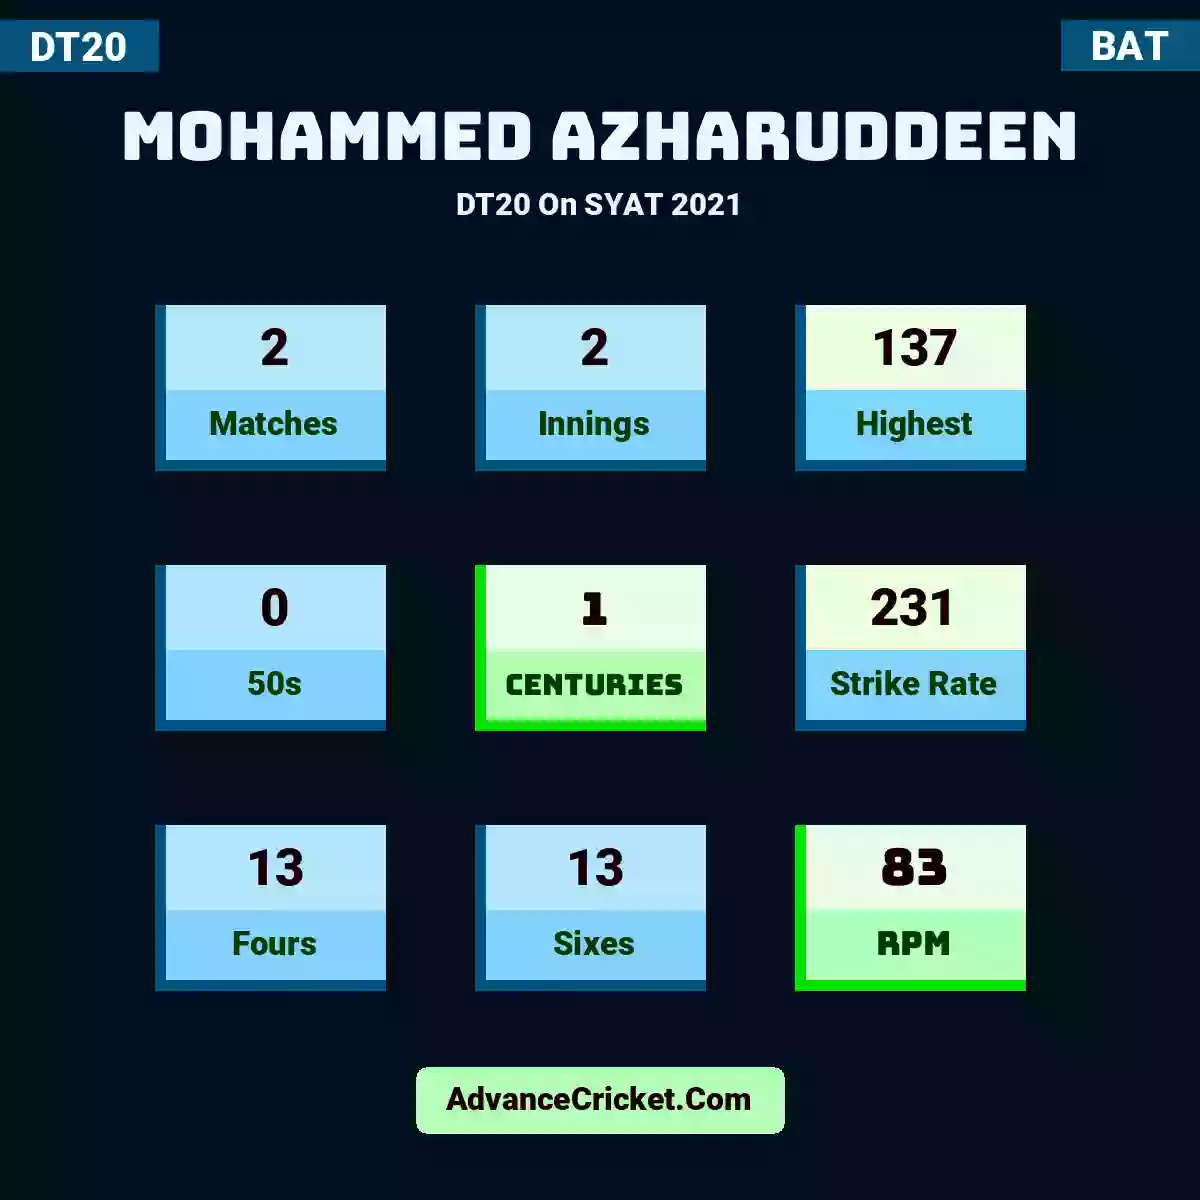 Mohammed Azharuddeen DT20  On SYAT 2021, Mohammed Azharuddeen played 2 matches, scored 137 runs as highest, 0 half-centuries, and 1 centuries, with a strike rate of 231. M.Azharuddeen hit 13 fours and 13 sixes, with an RPM of 83.